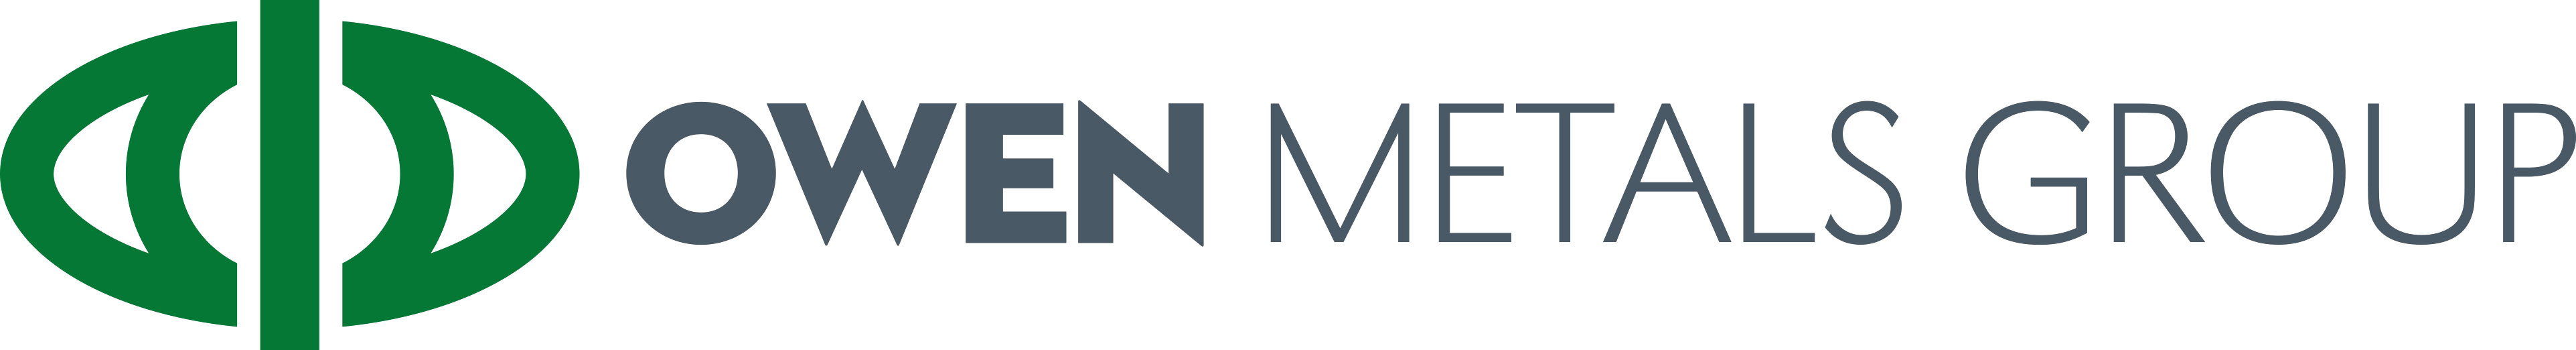 Owen Metals Group Logo